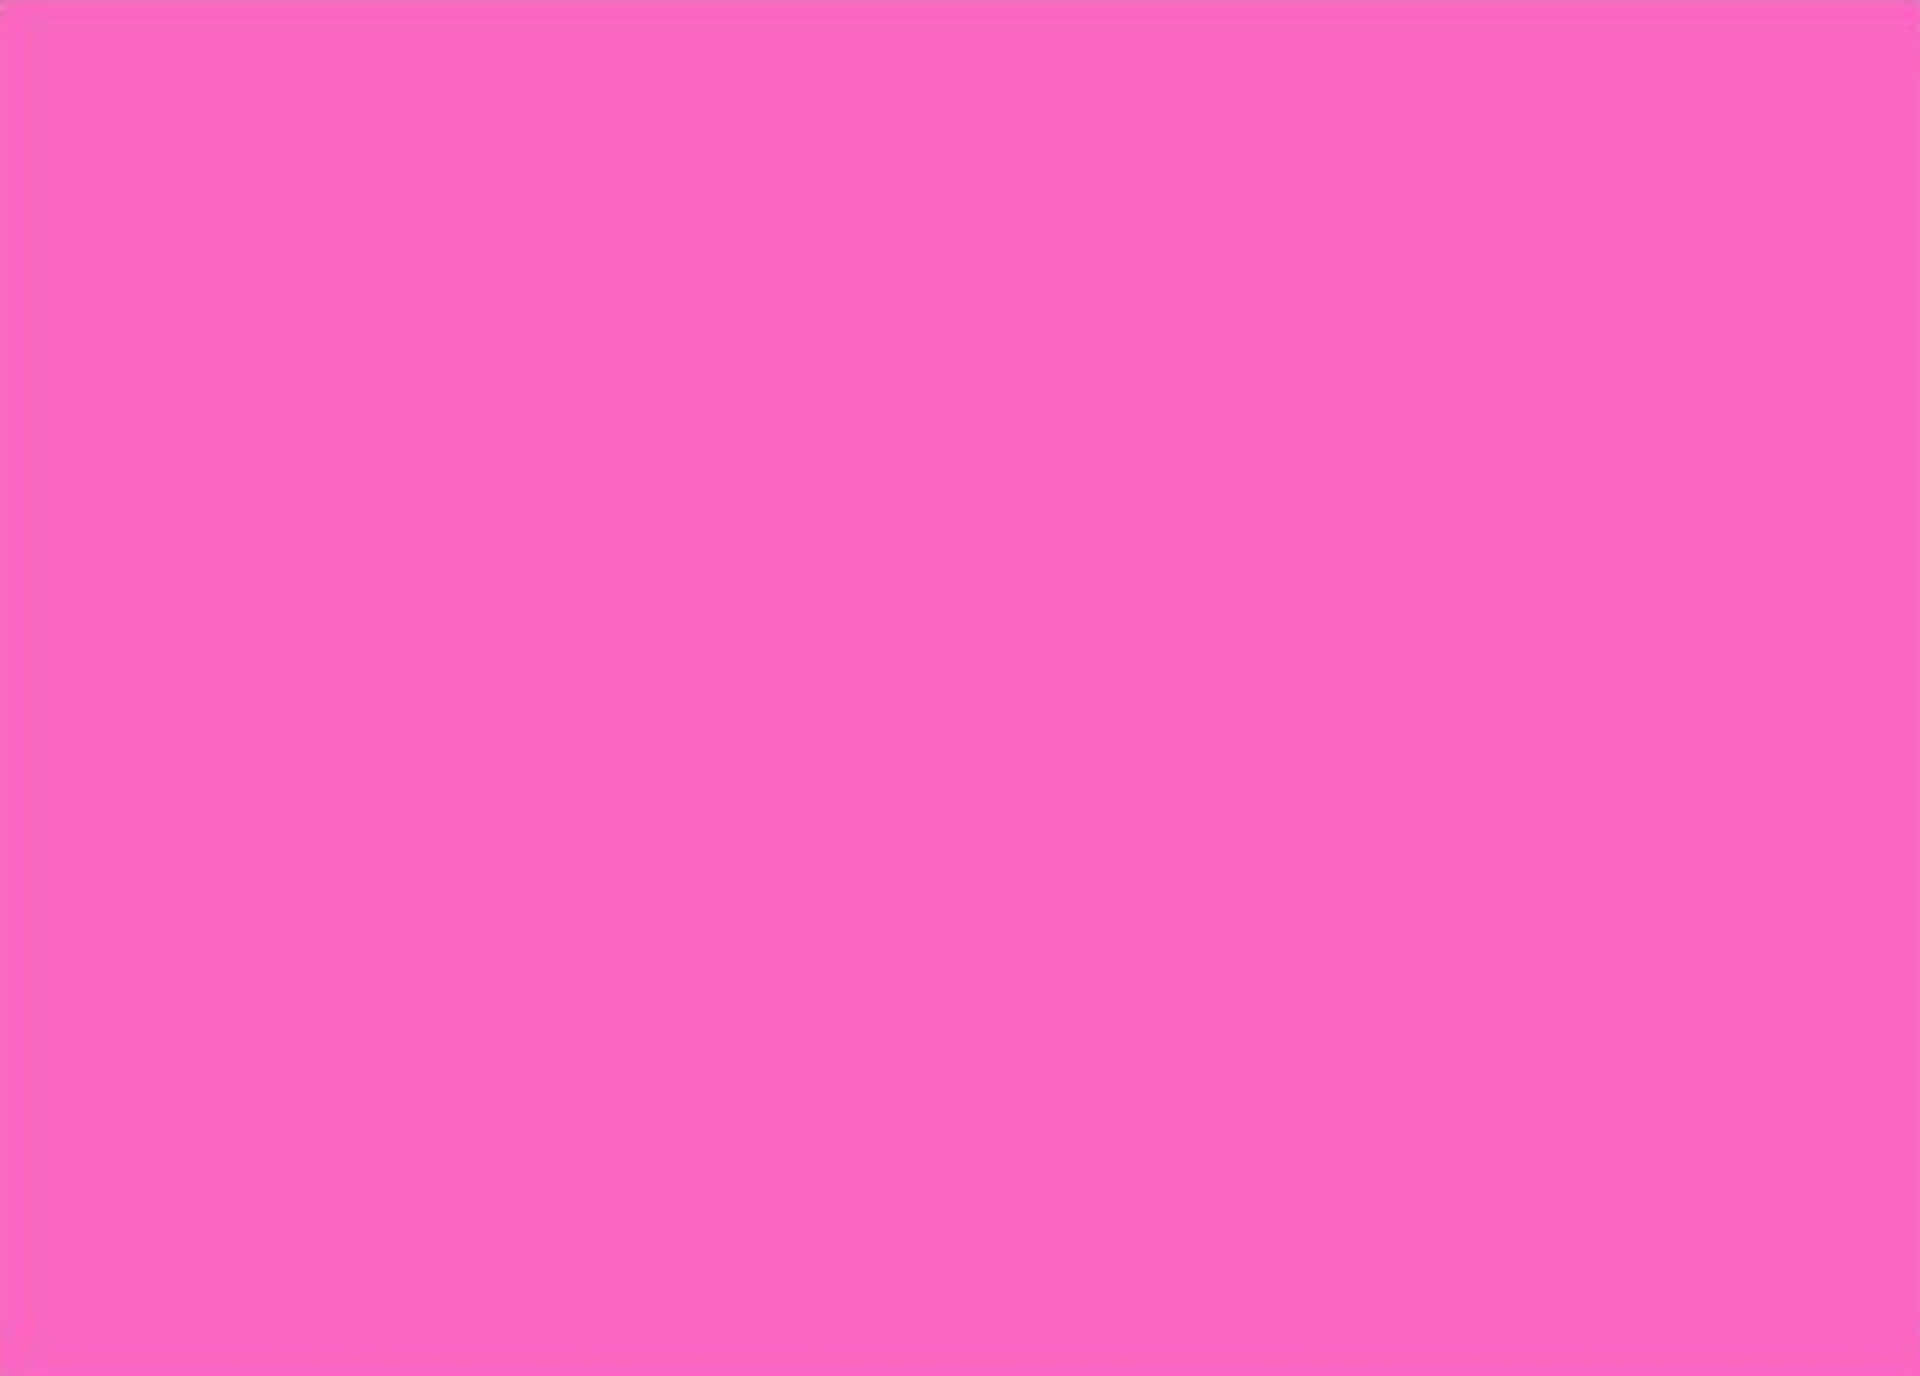 Pastel pink texture with a subtle sparkle. Wallpaper